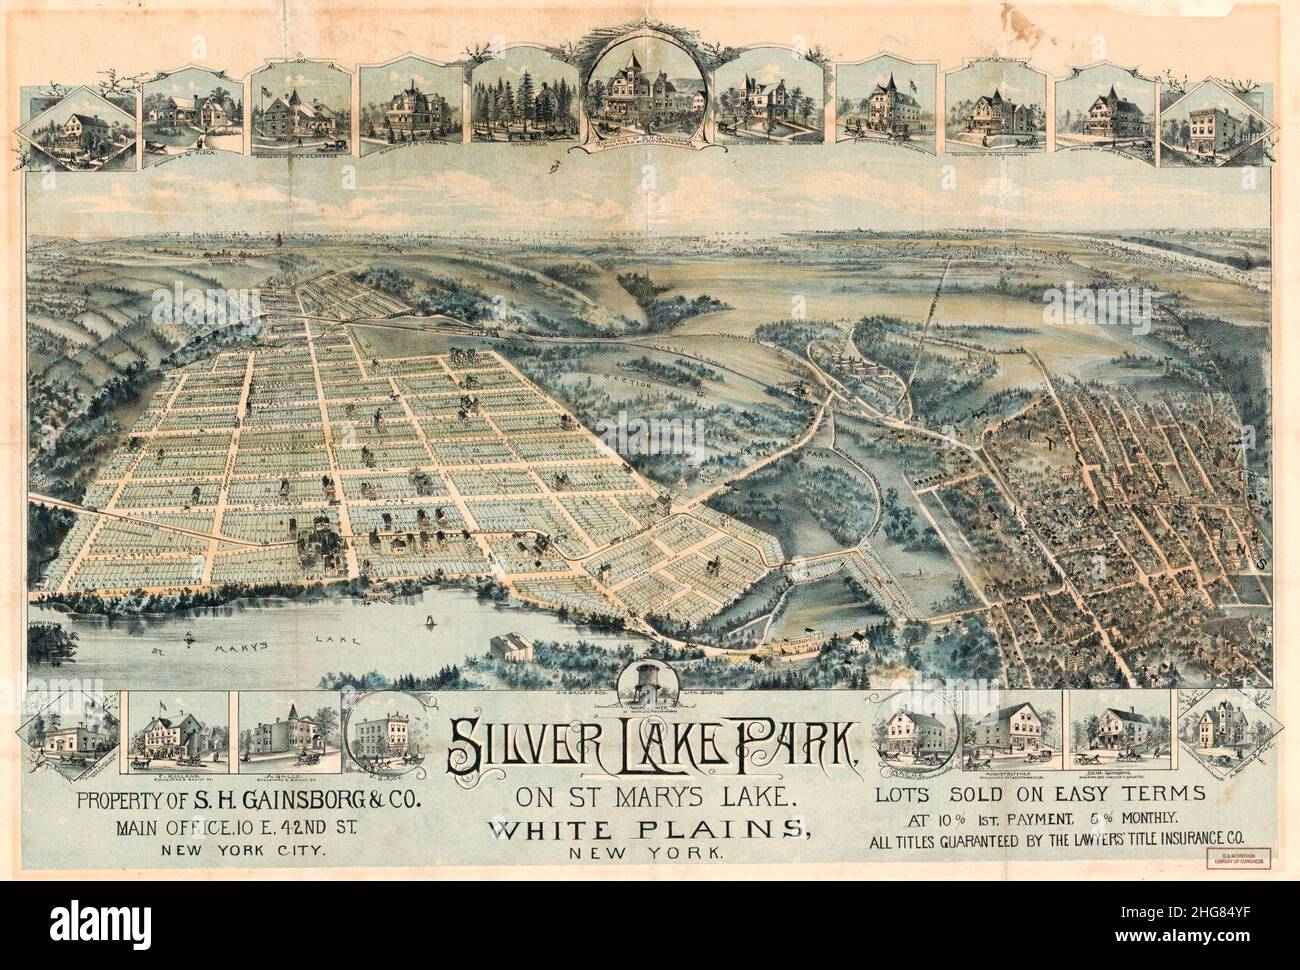 Silver Lake Park, on St Mary's Lake, White Plains, New York Stock Photo